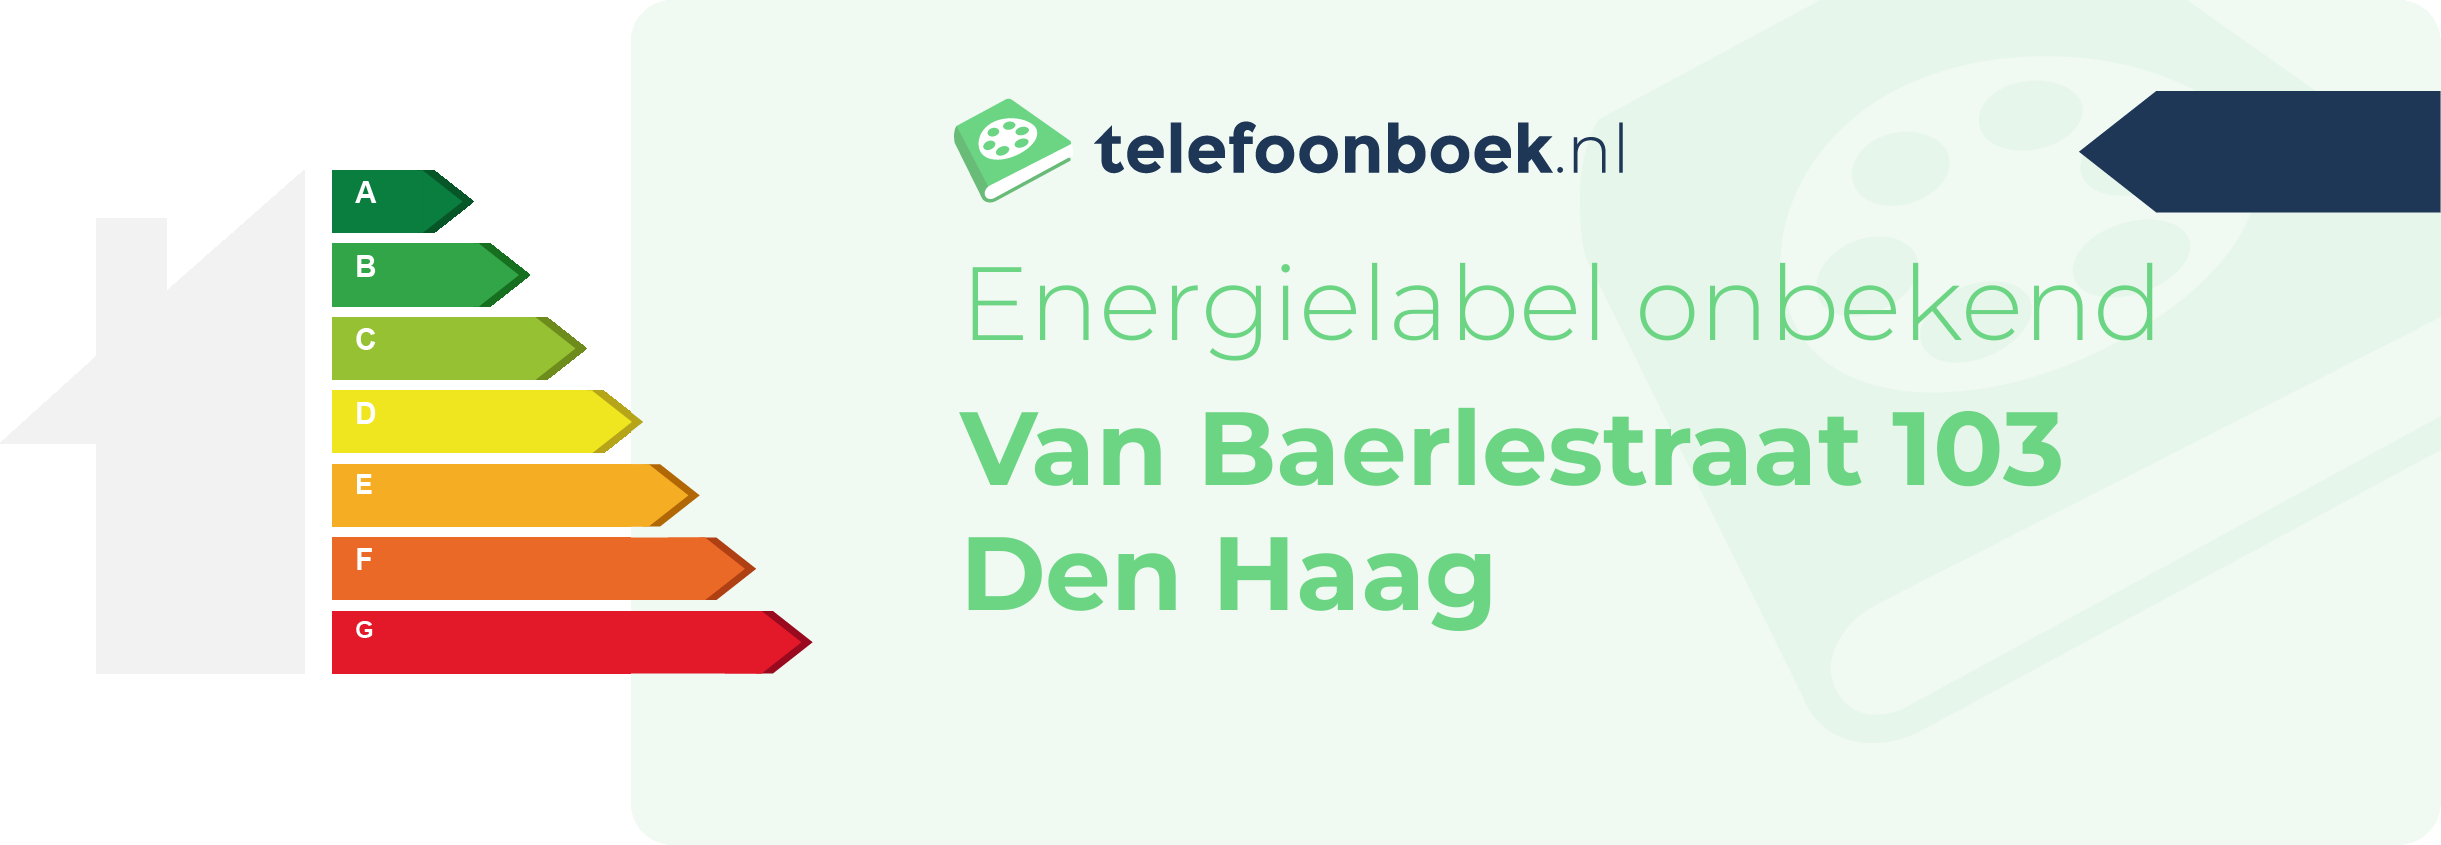 Energielabel Van Baerlestraat 103 Den Haag